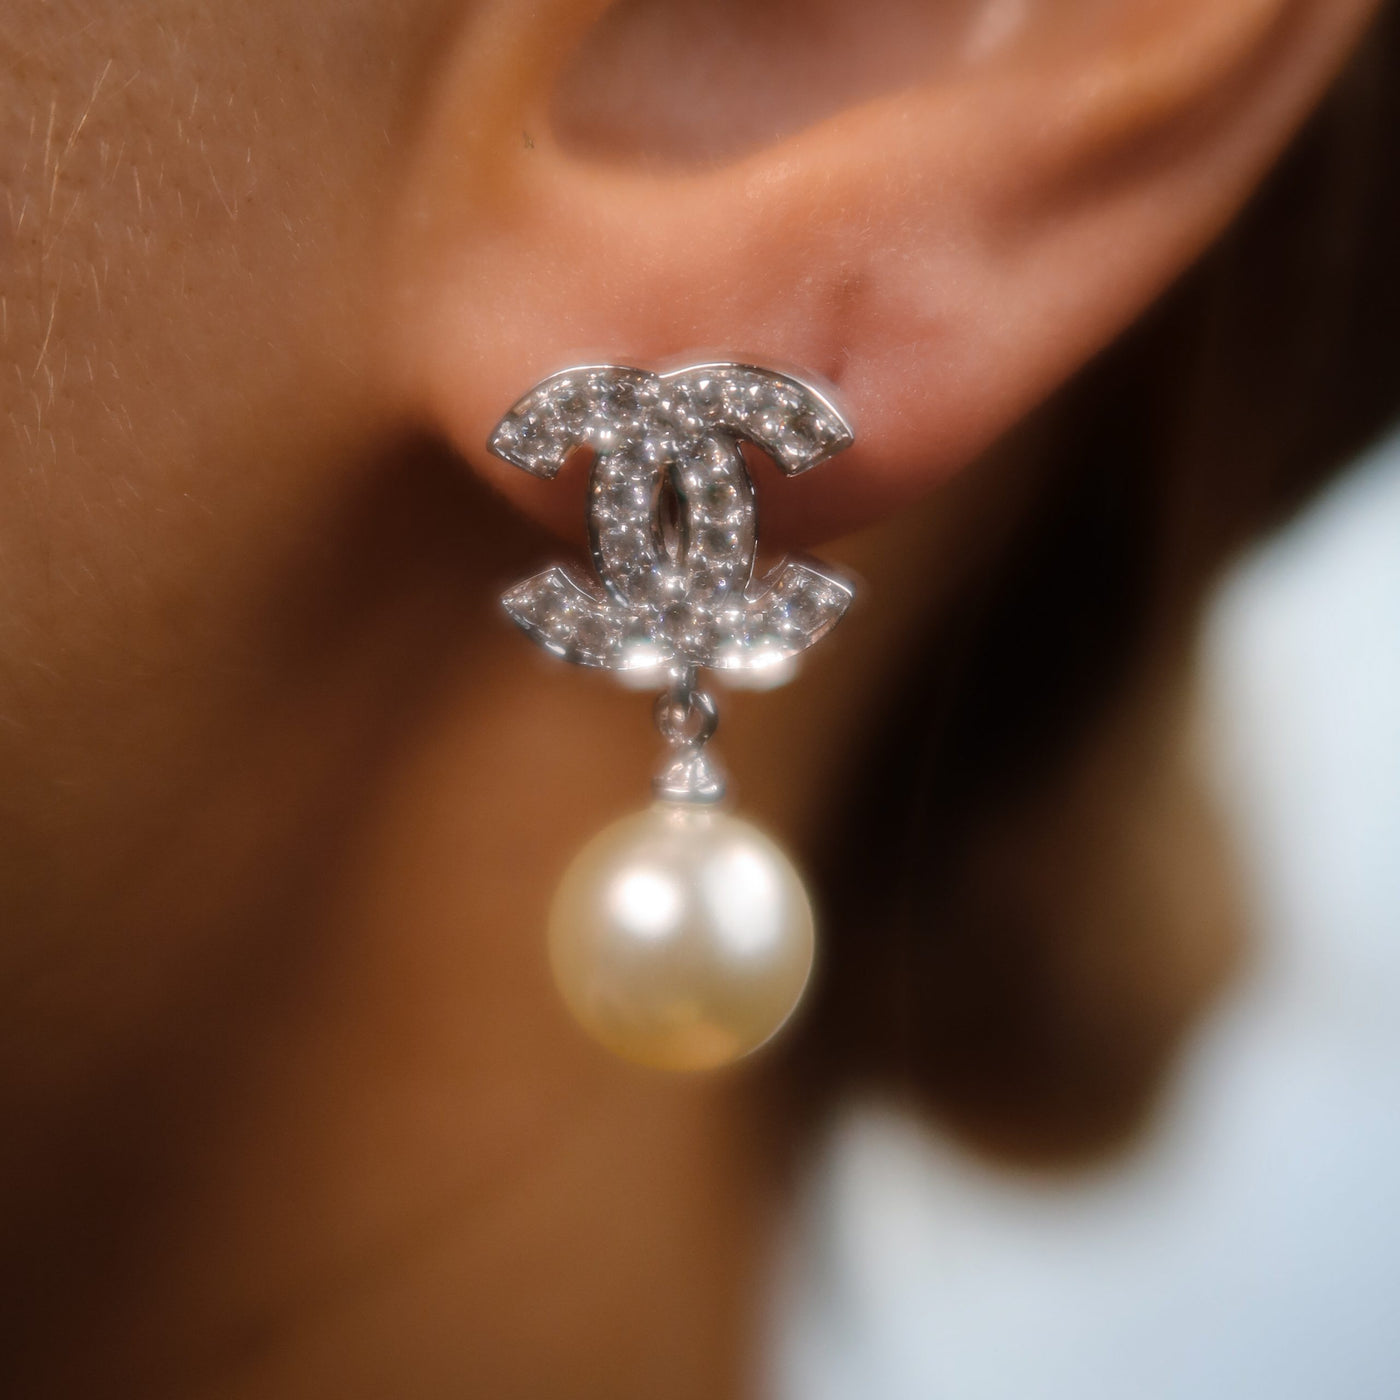 C & C  Cabochon Pearl Drop Earrings